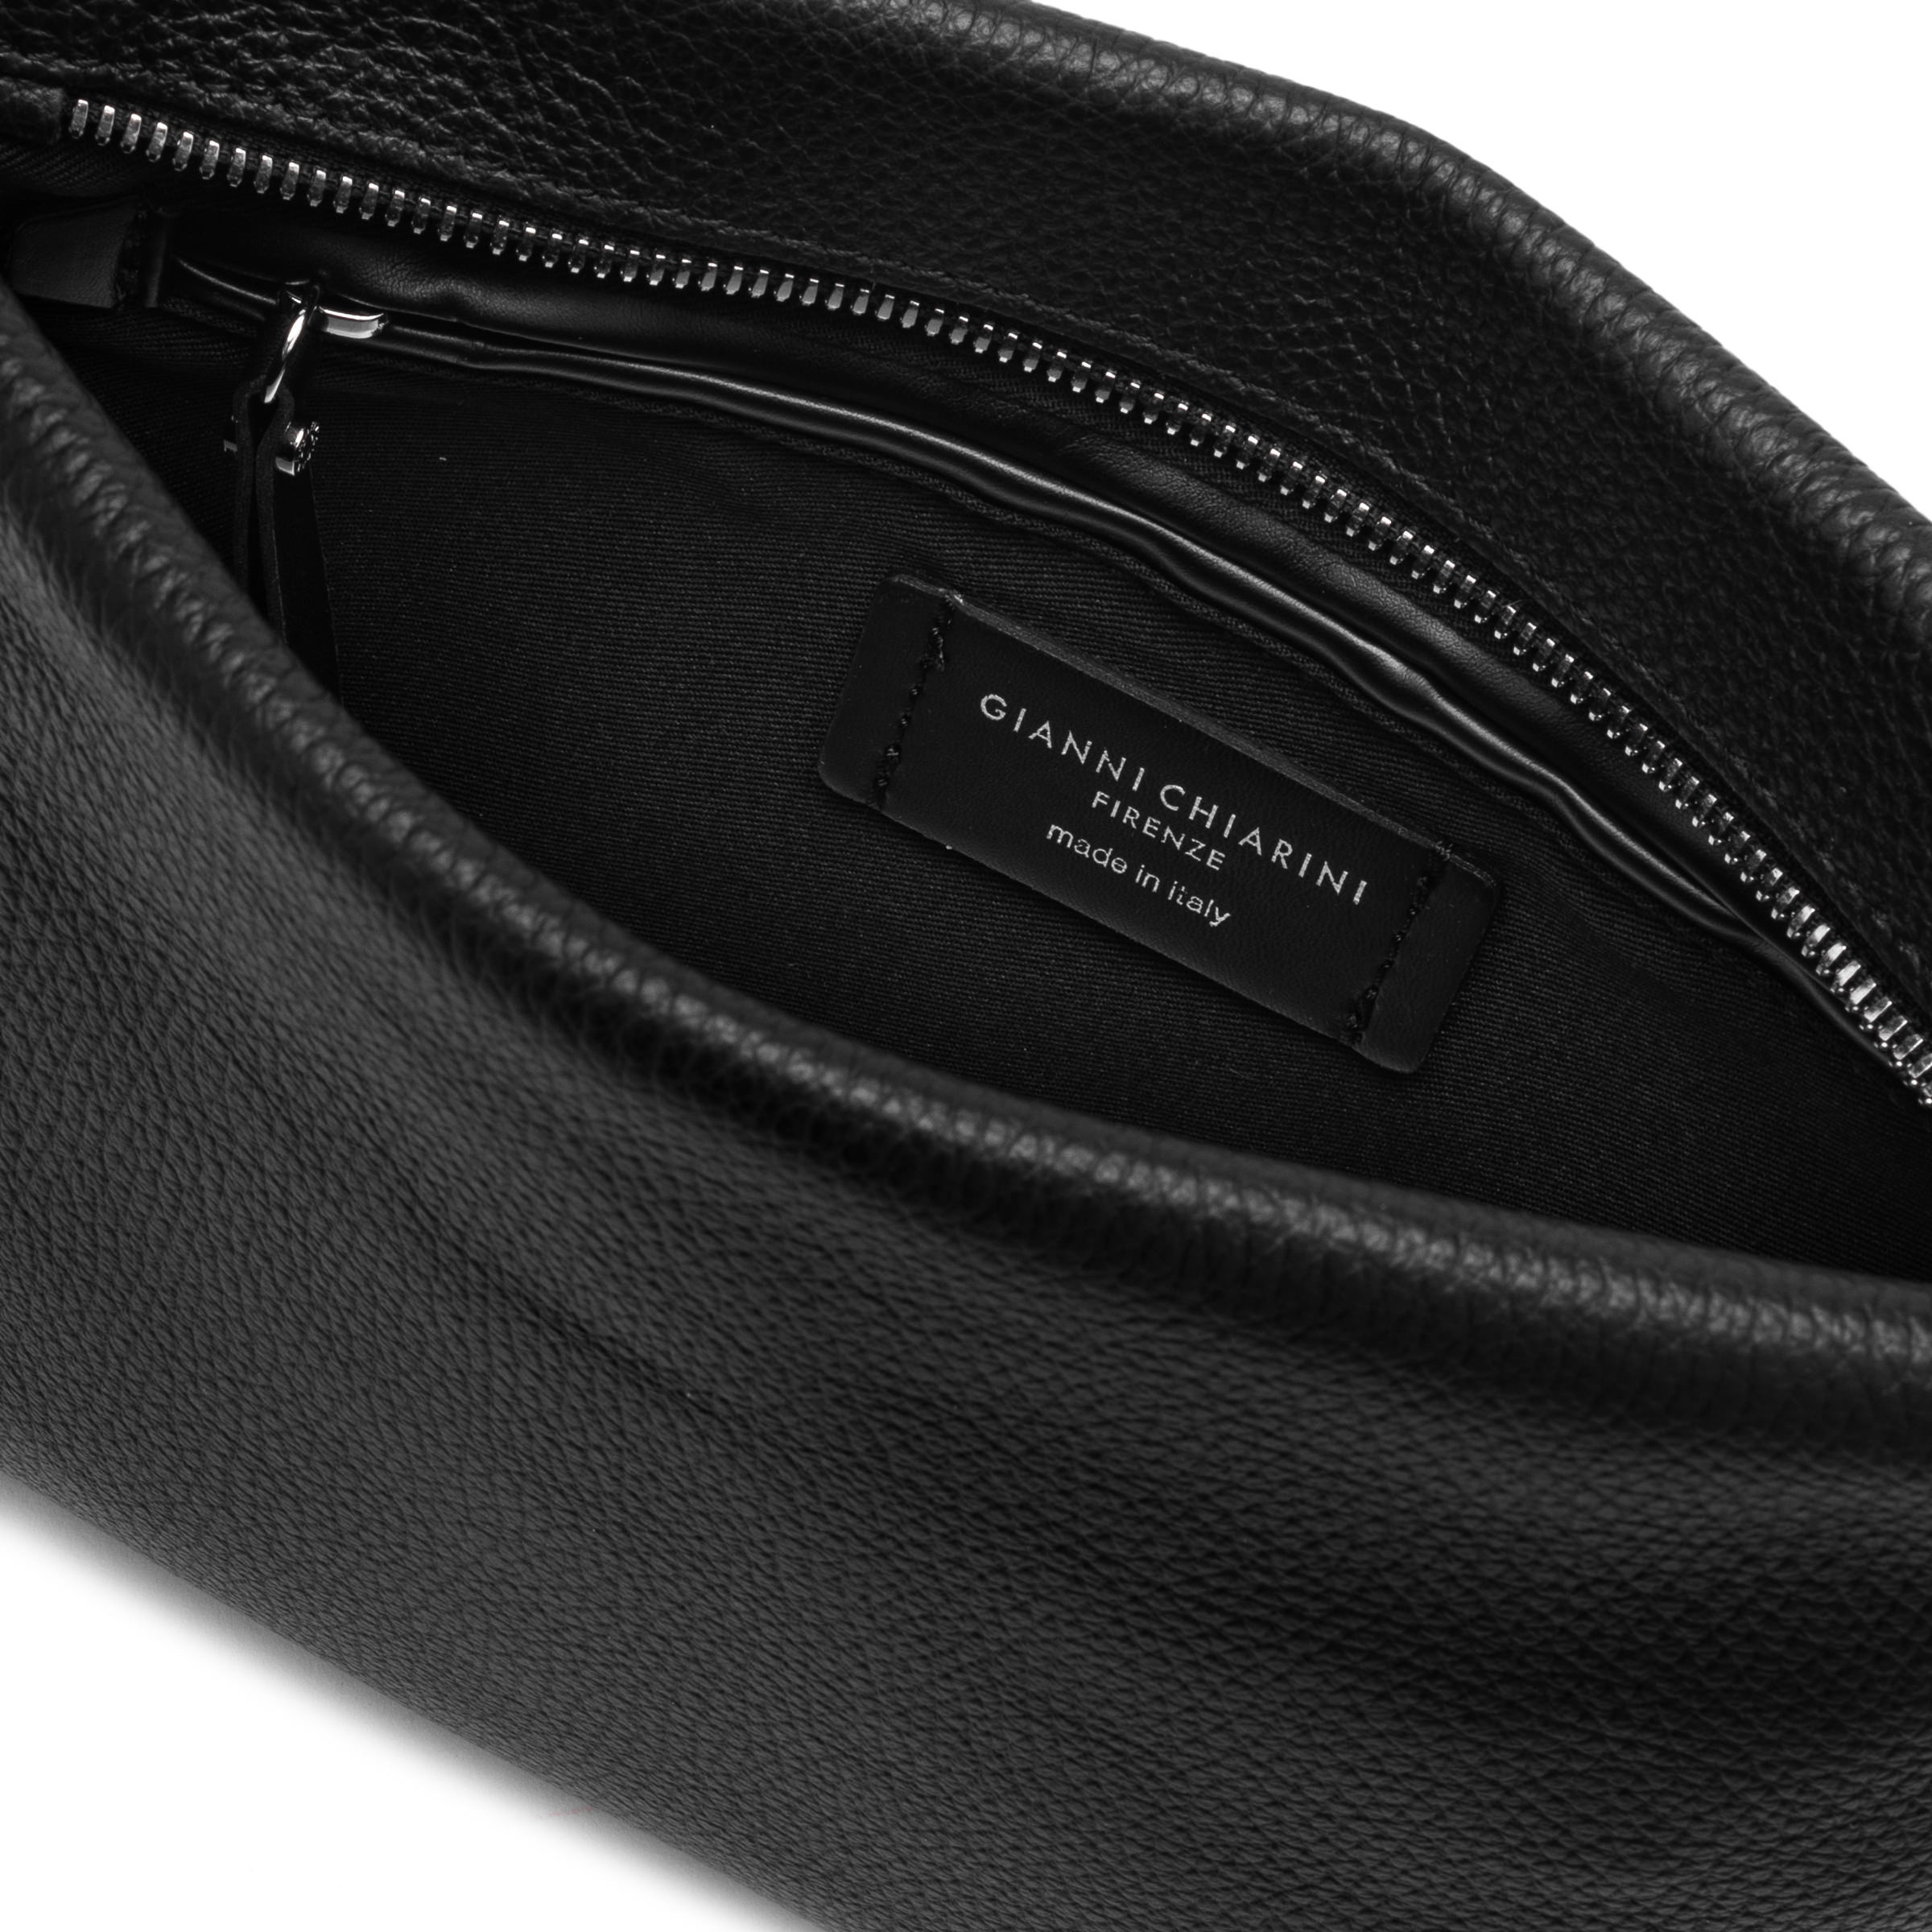 Gianni Chiarini - Brenda leather bag, Black, large image number 4